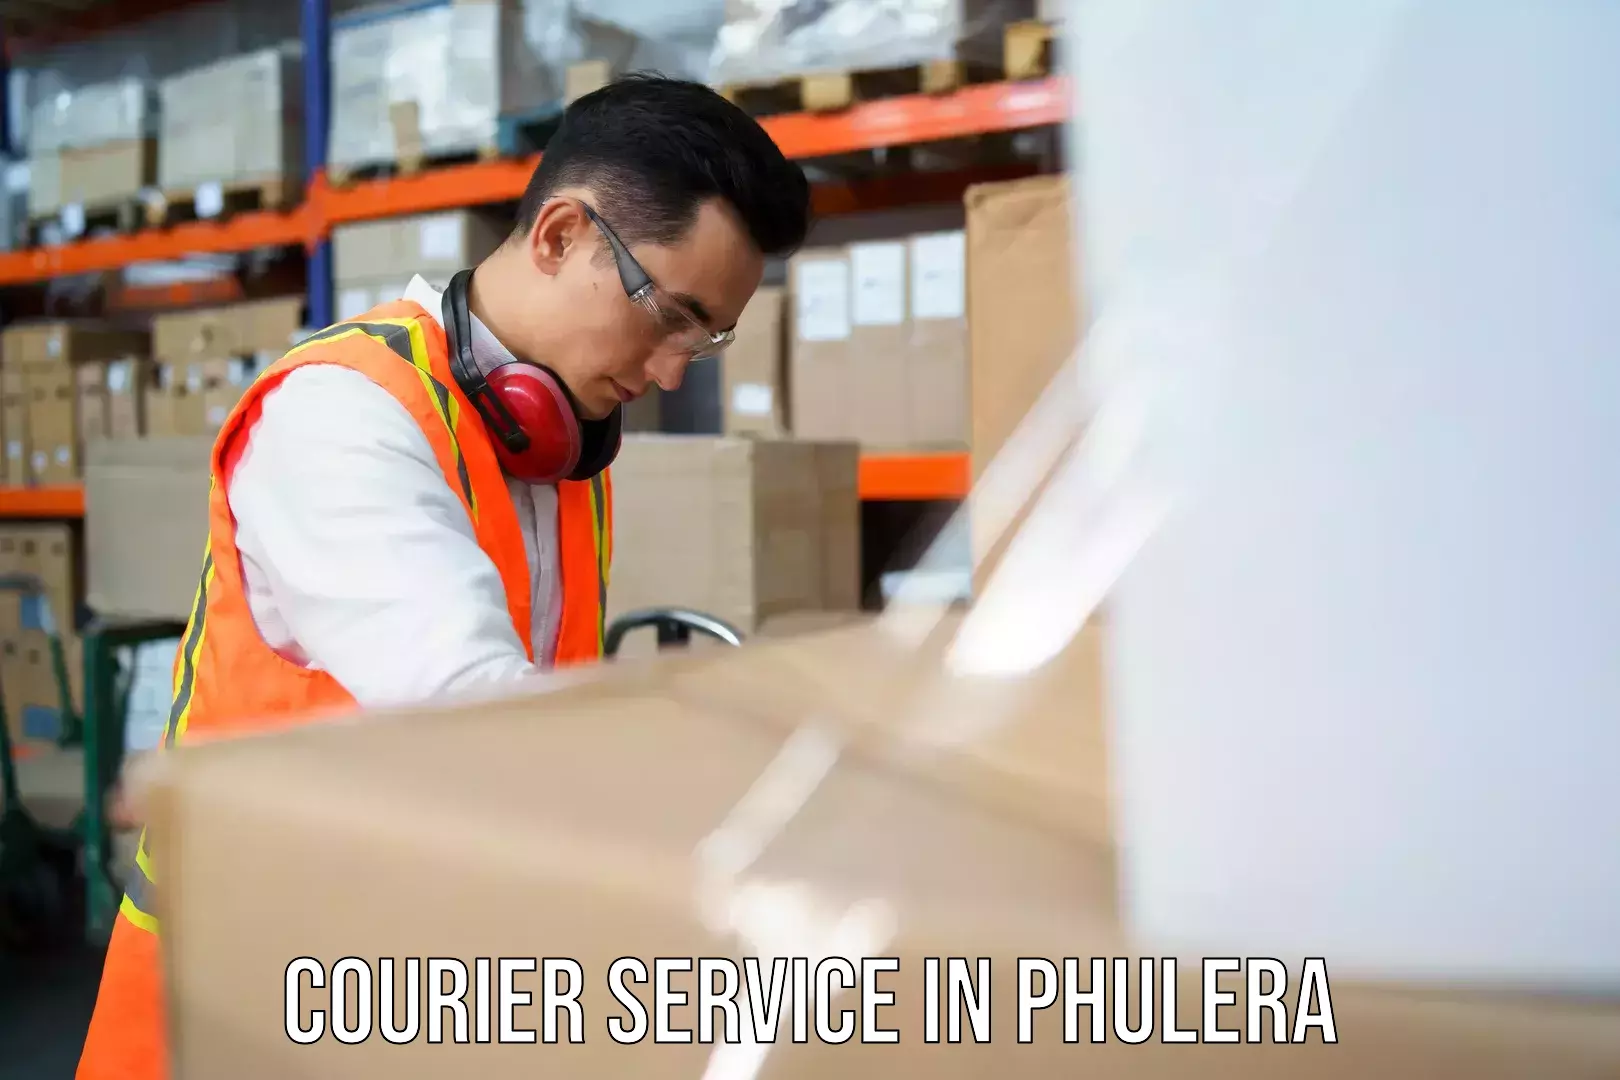 Efficient order fulfillment in Phulera